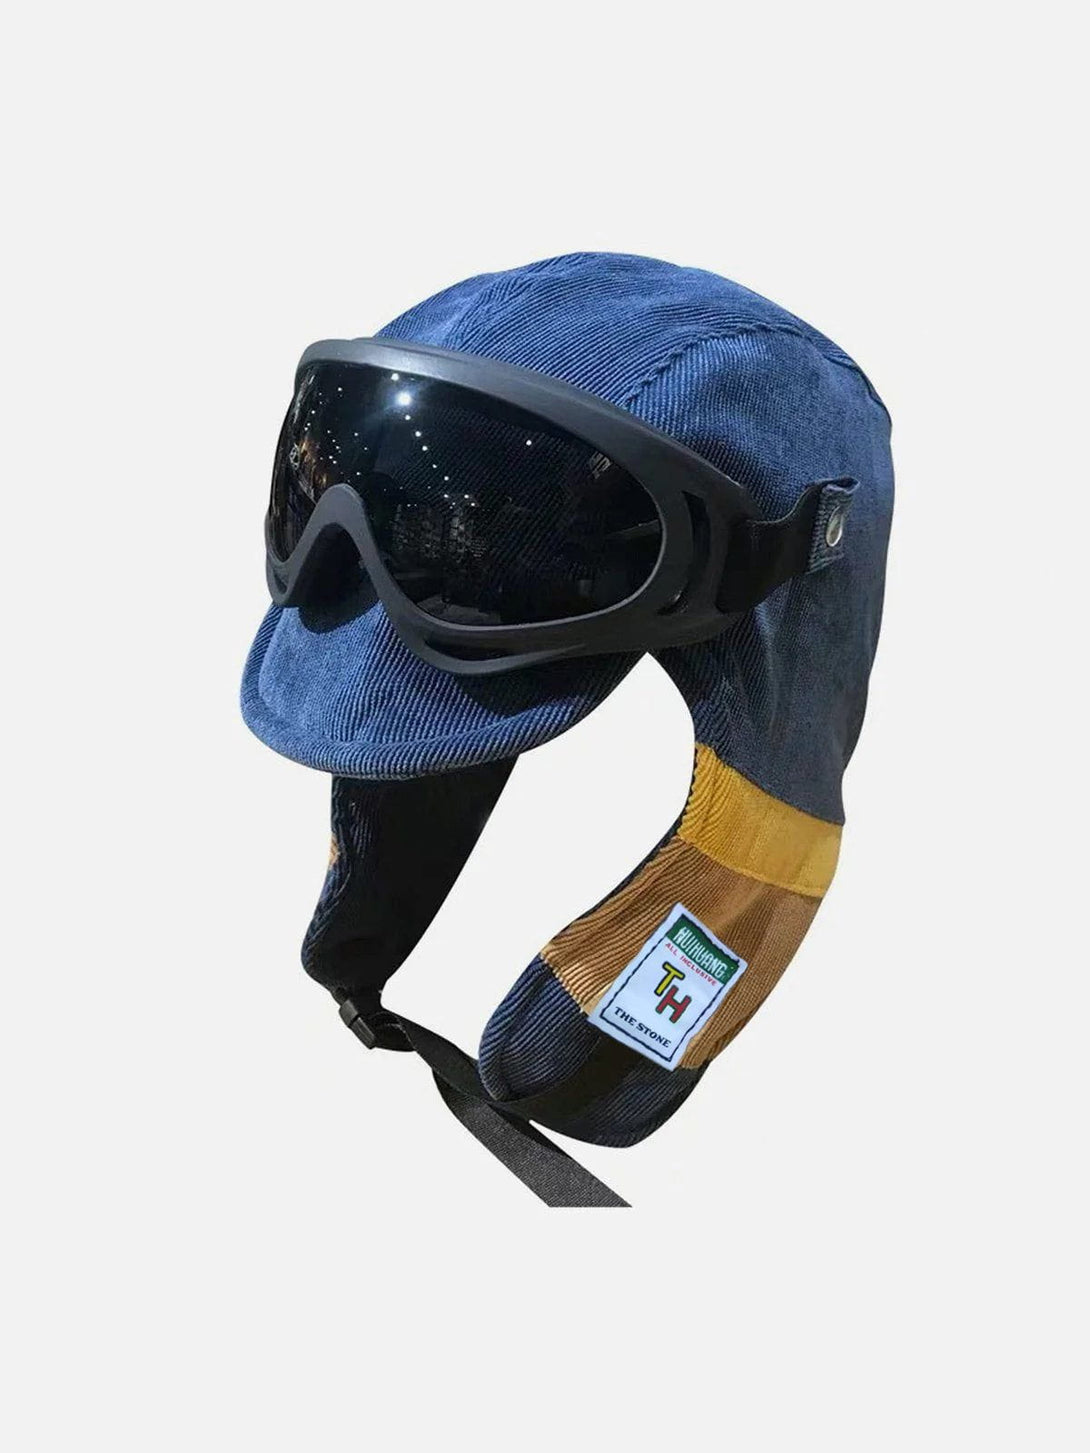 Majesda® - Cycling Windproof Warm Glasses Hat- Outfit Ideas - Streetwear Fashion - majesda.com